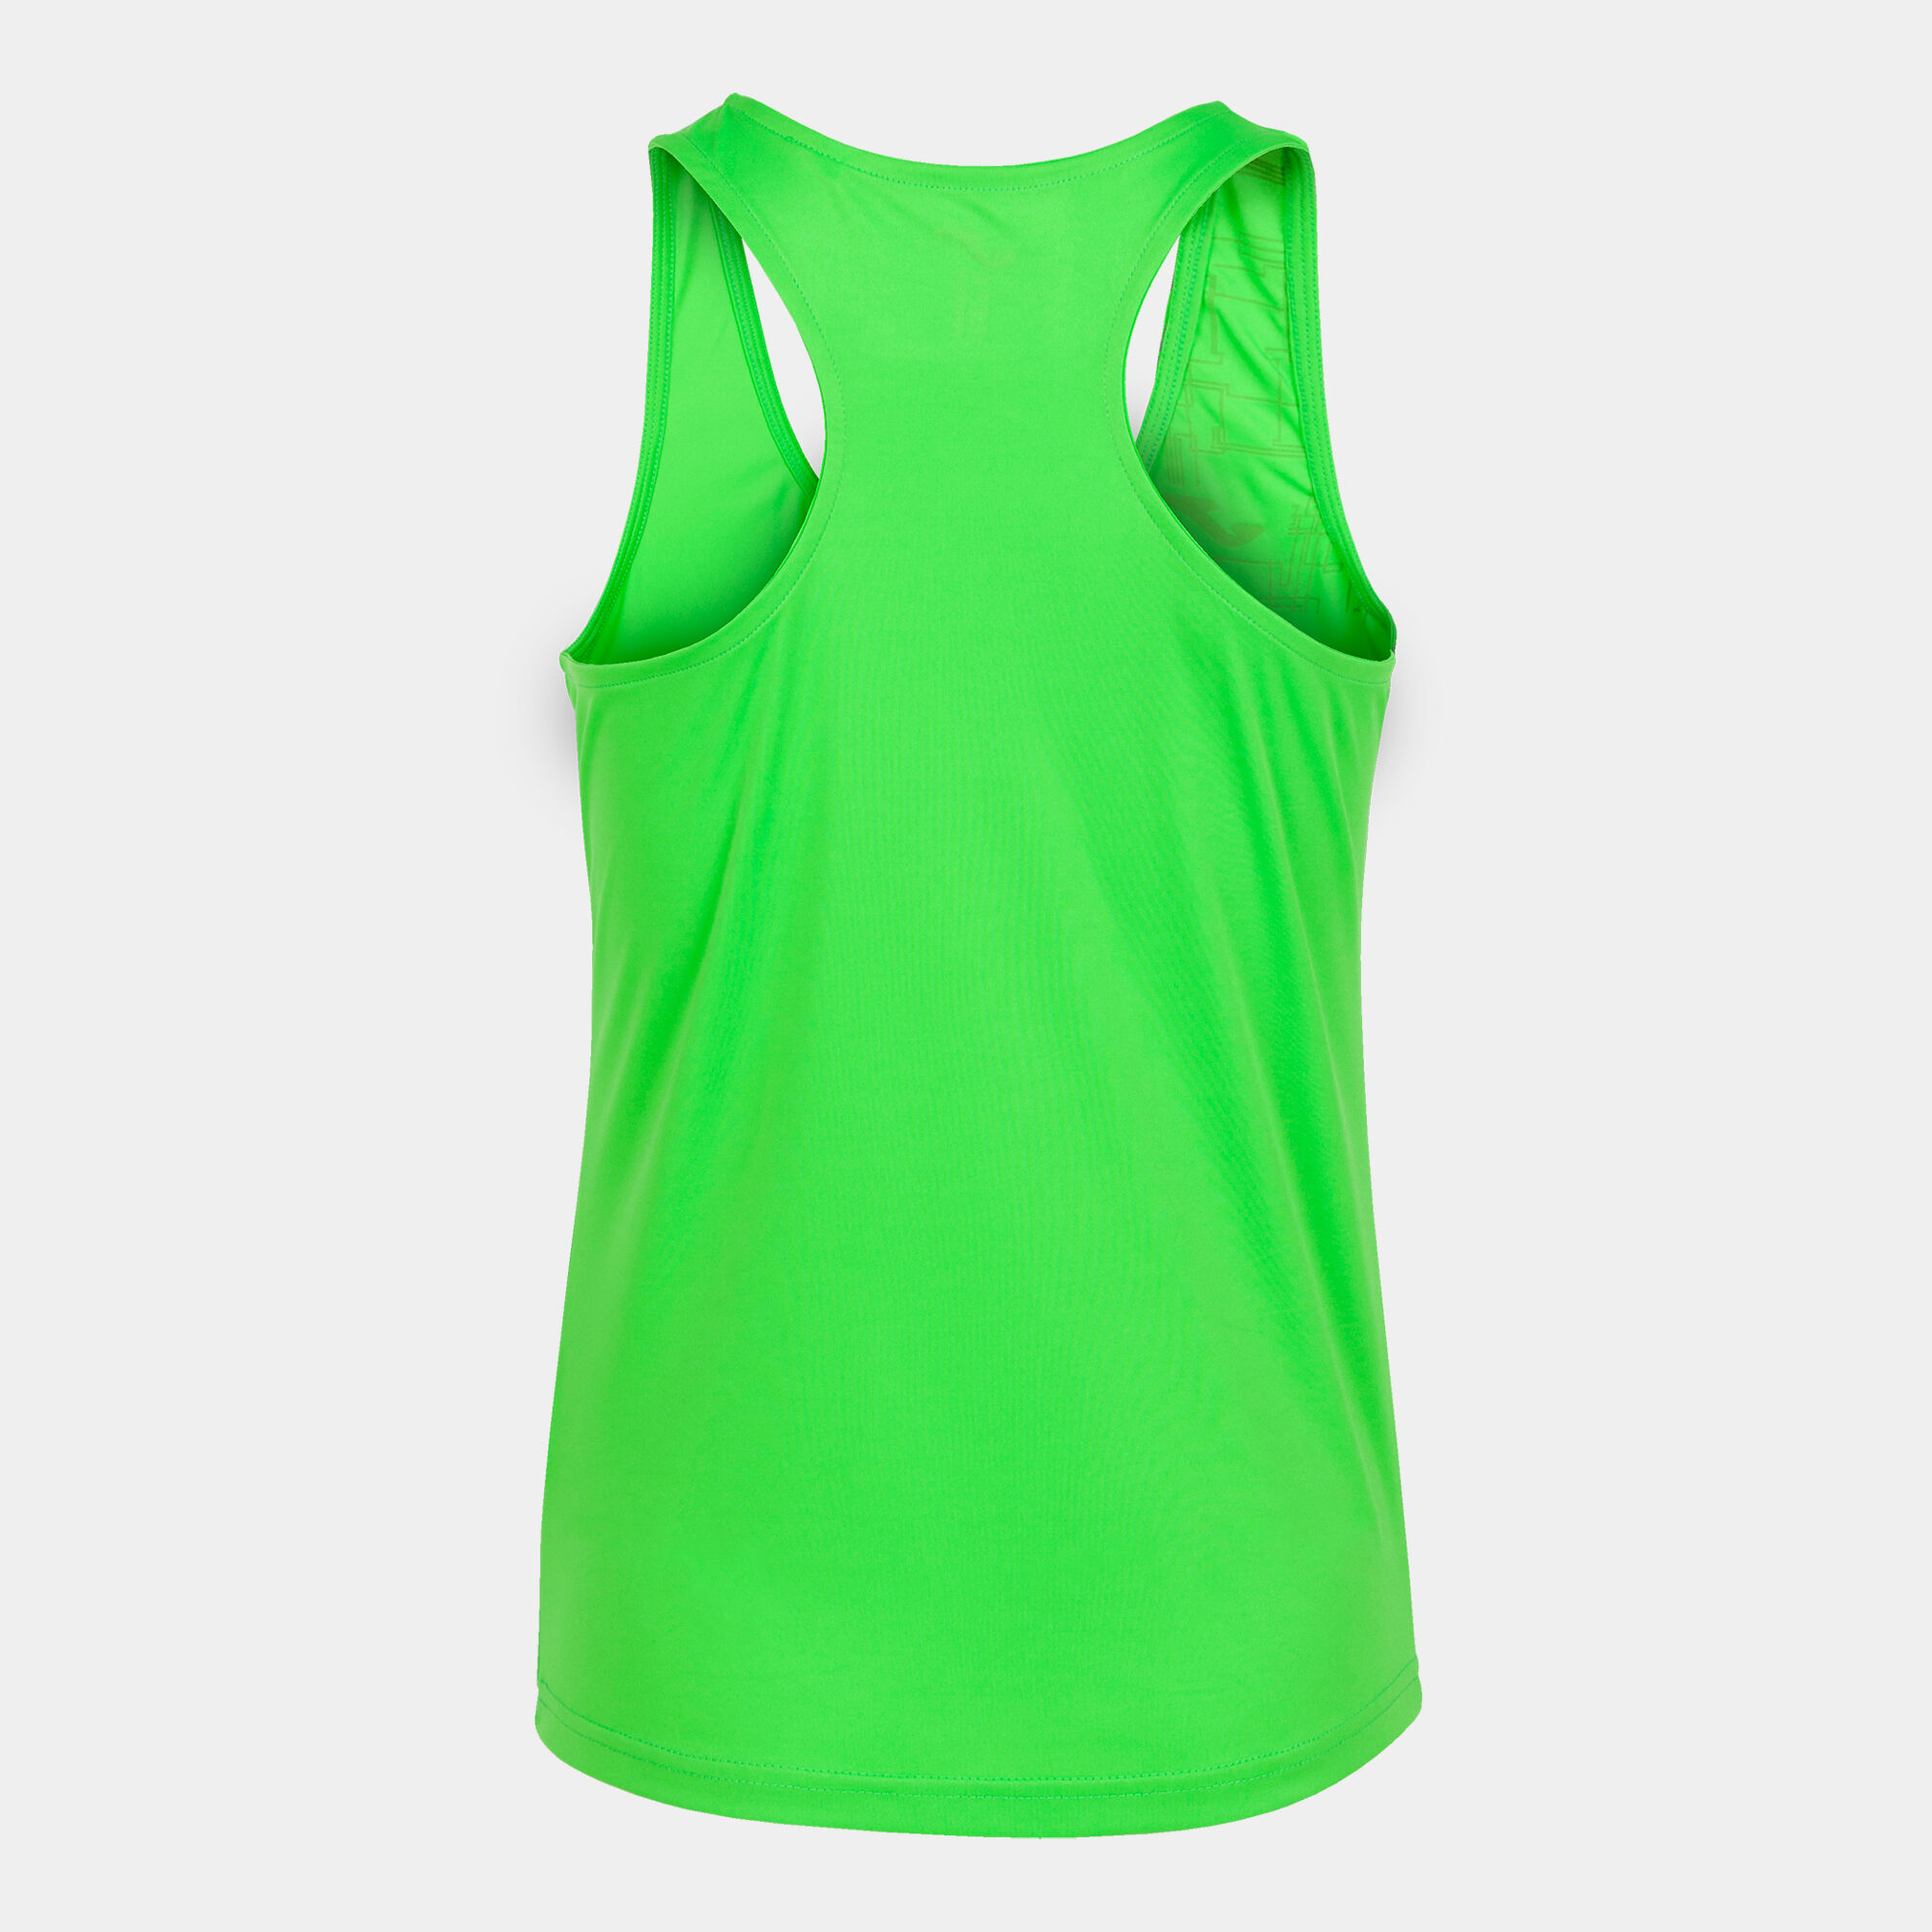 Camiseta tirantes mujer Elite VIII verde flúor